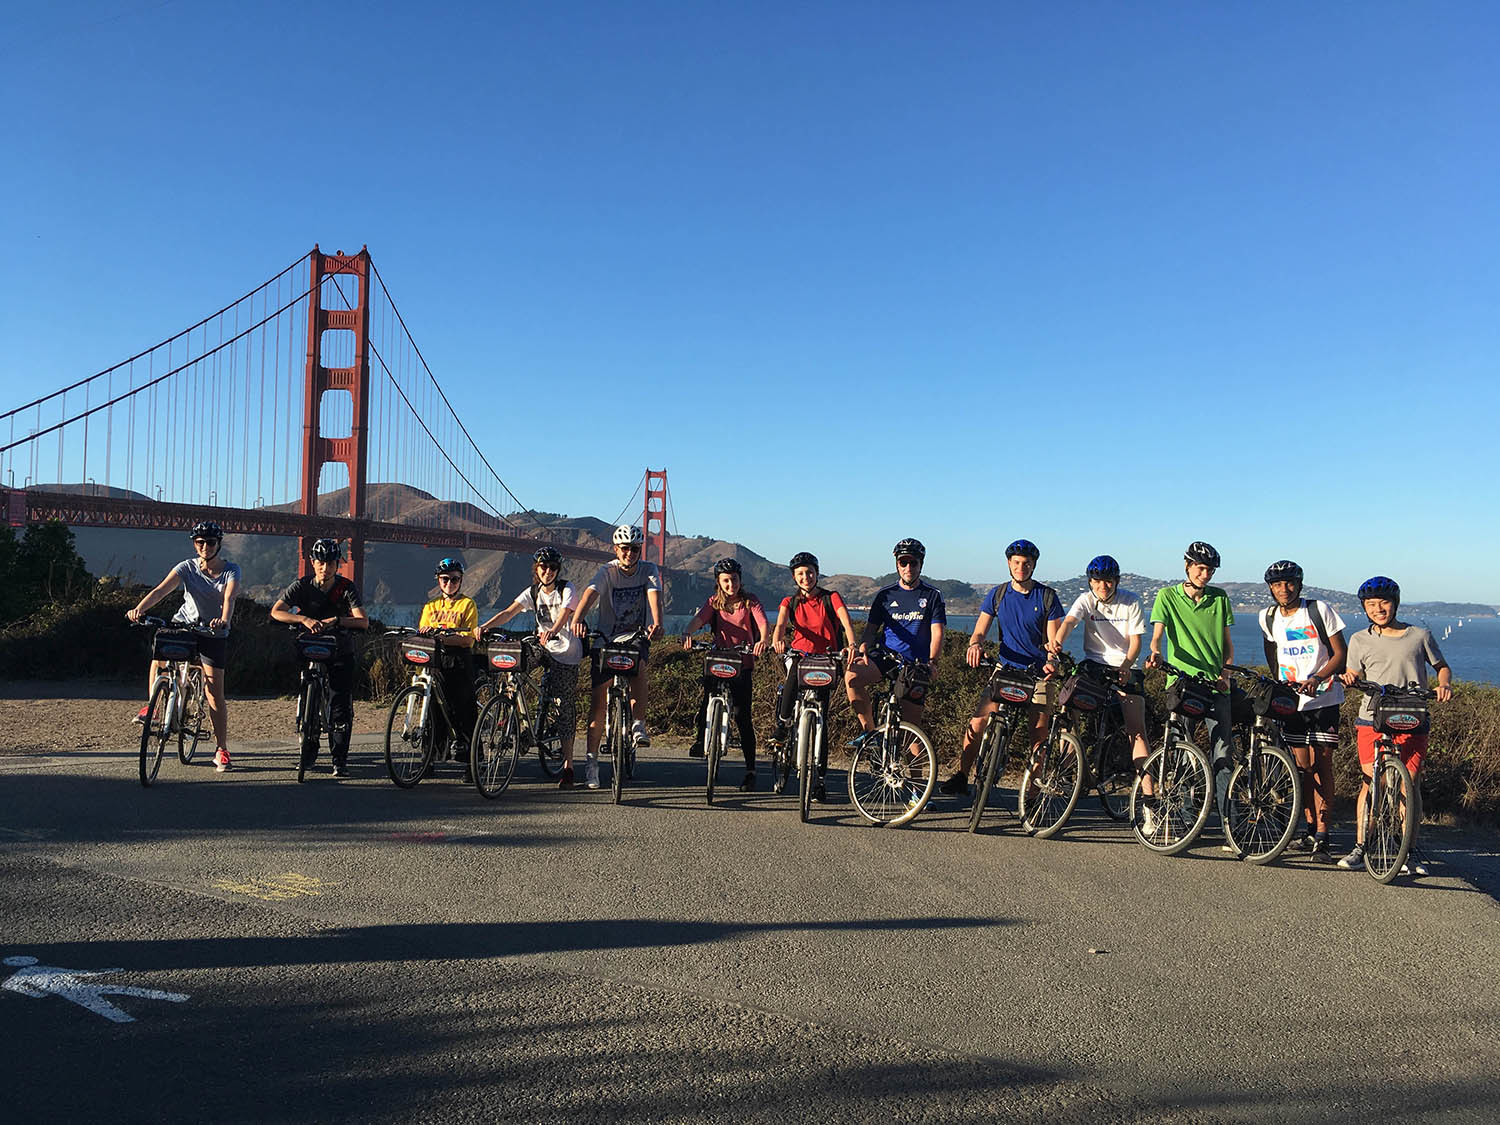 Cycling the Golden Gate bridge